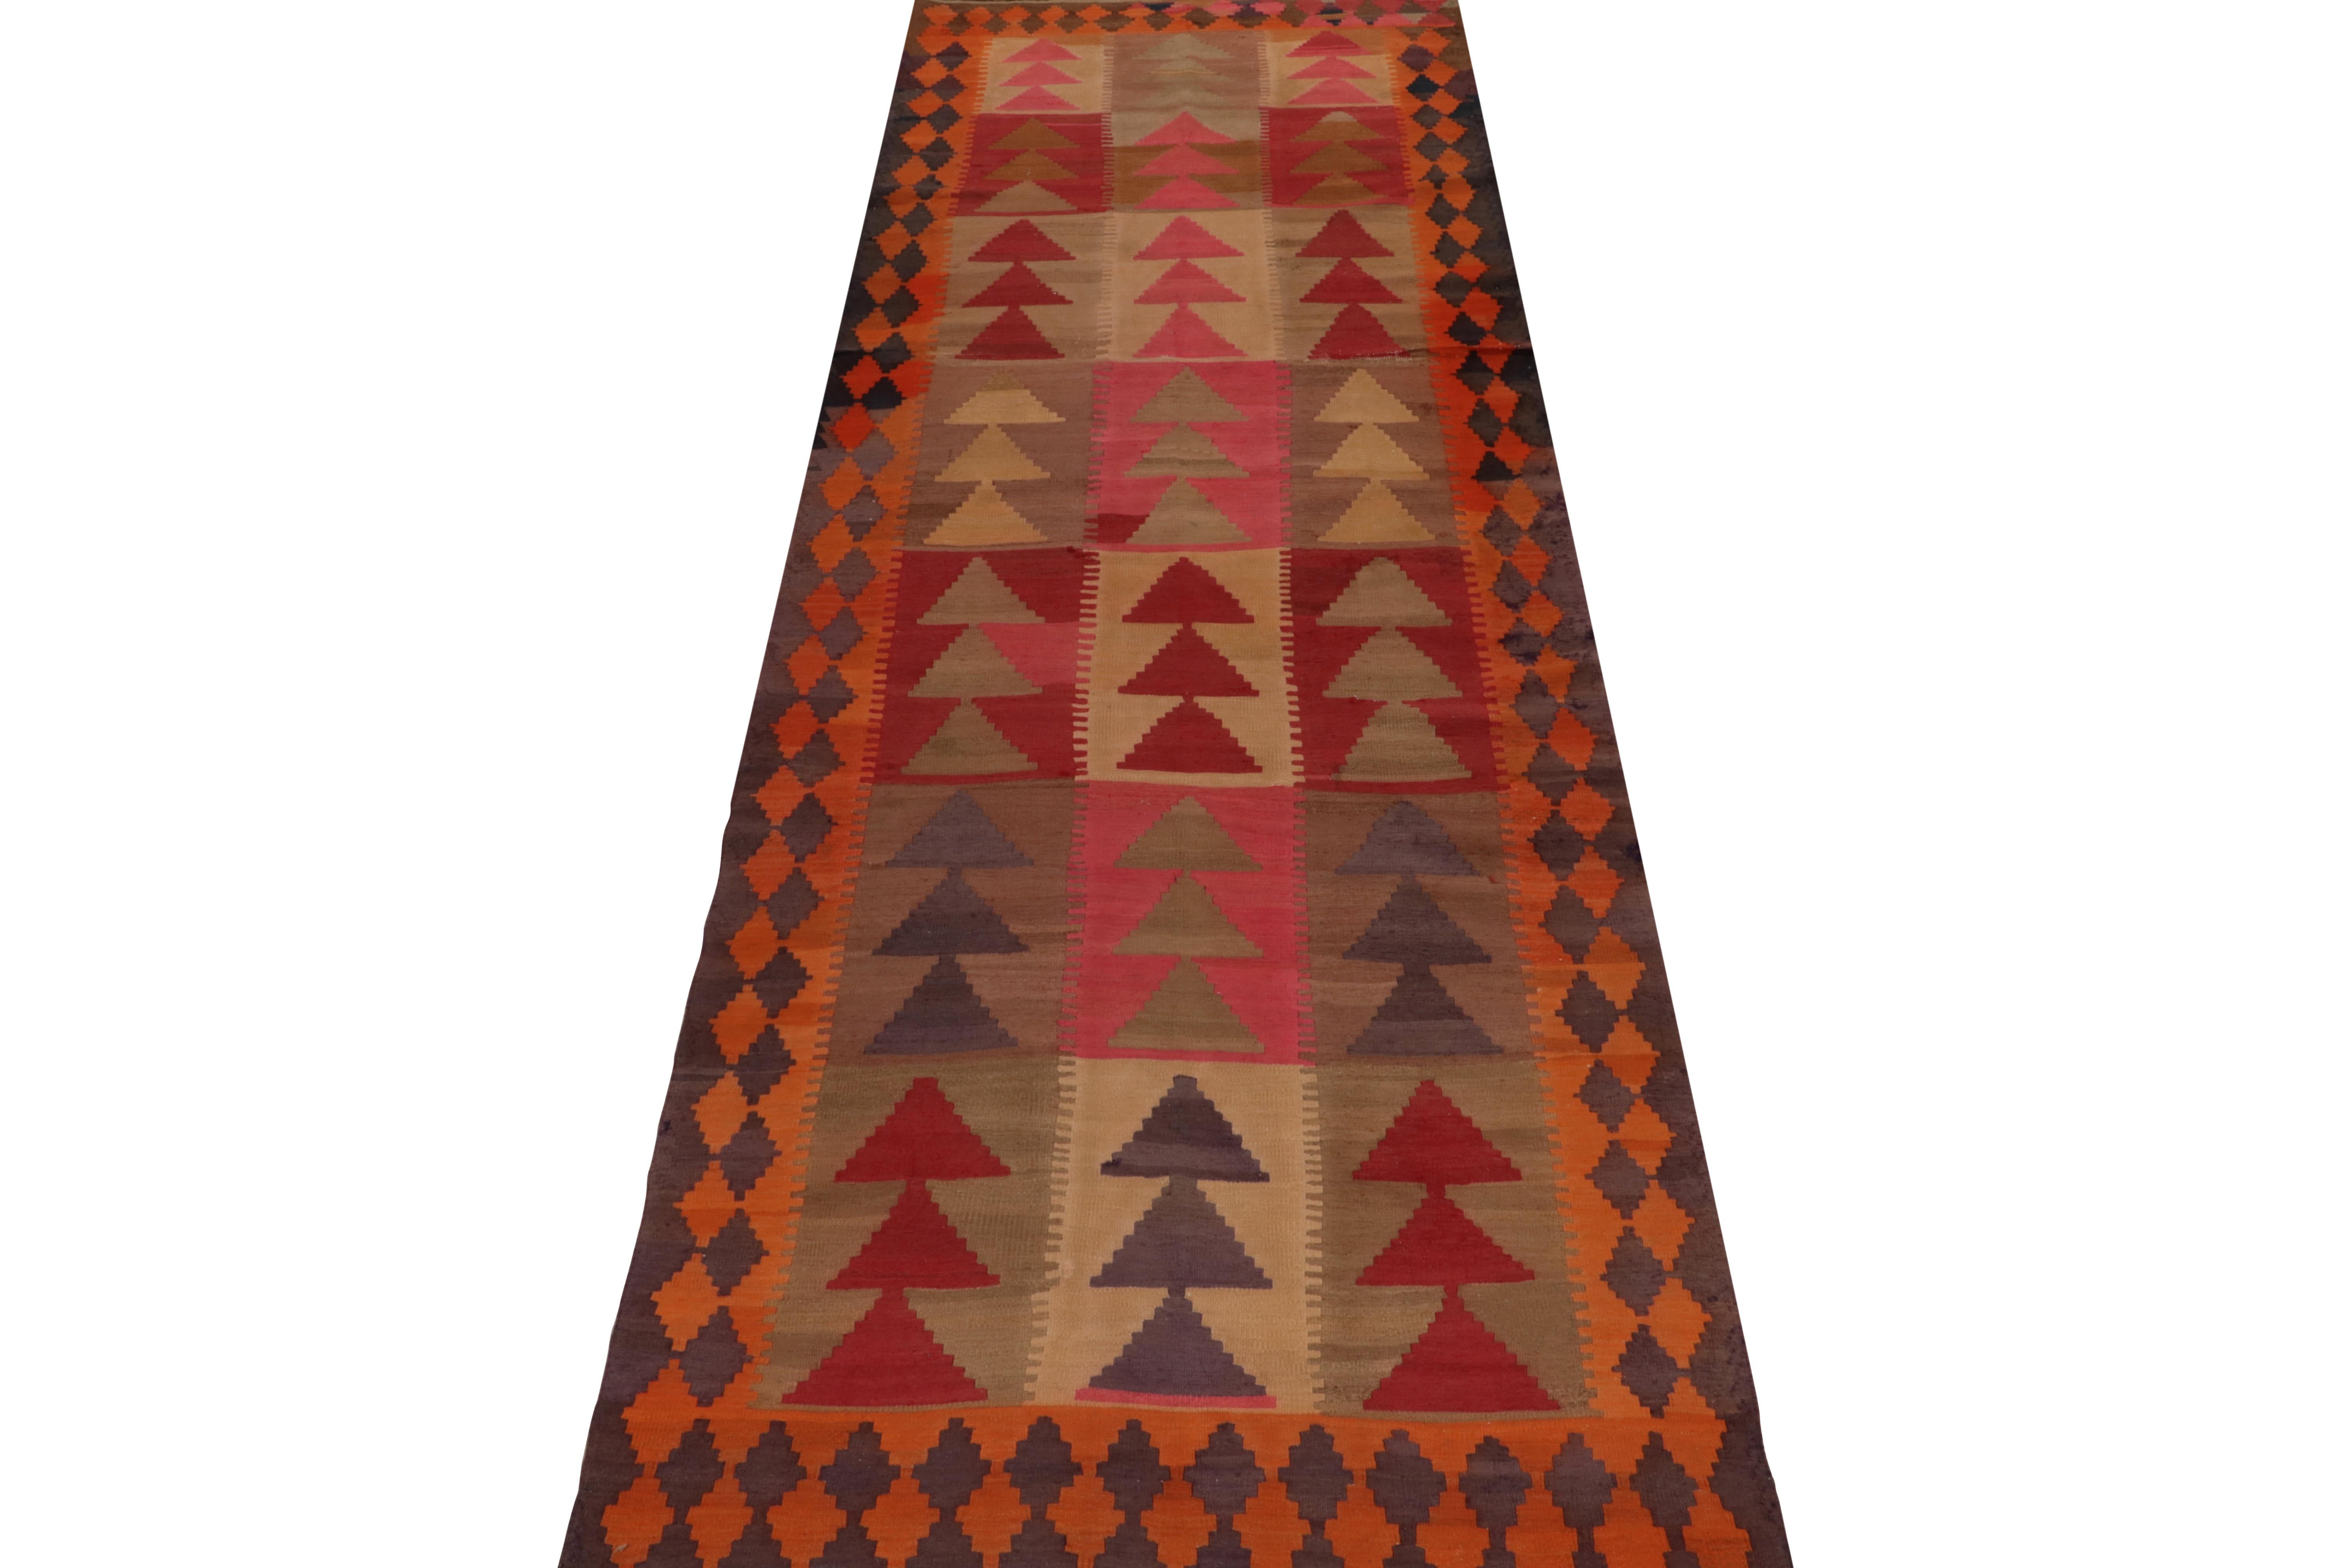 Indian Vintage Tribal Kilim Rug in Beige & Multicolor Geometric Patterns by Rug & Kilim For Sale